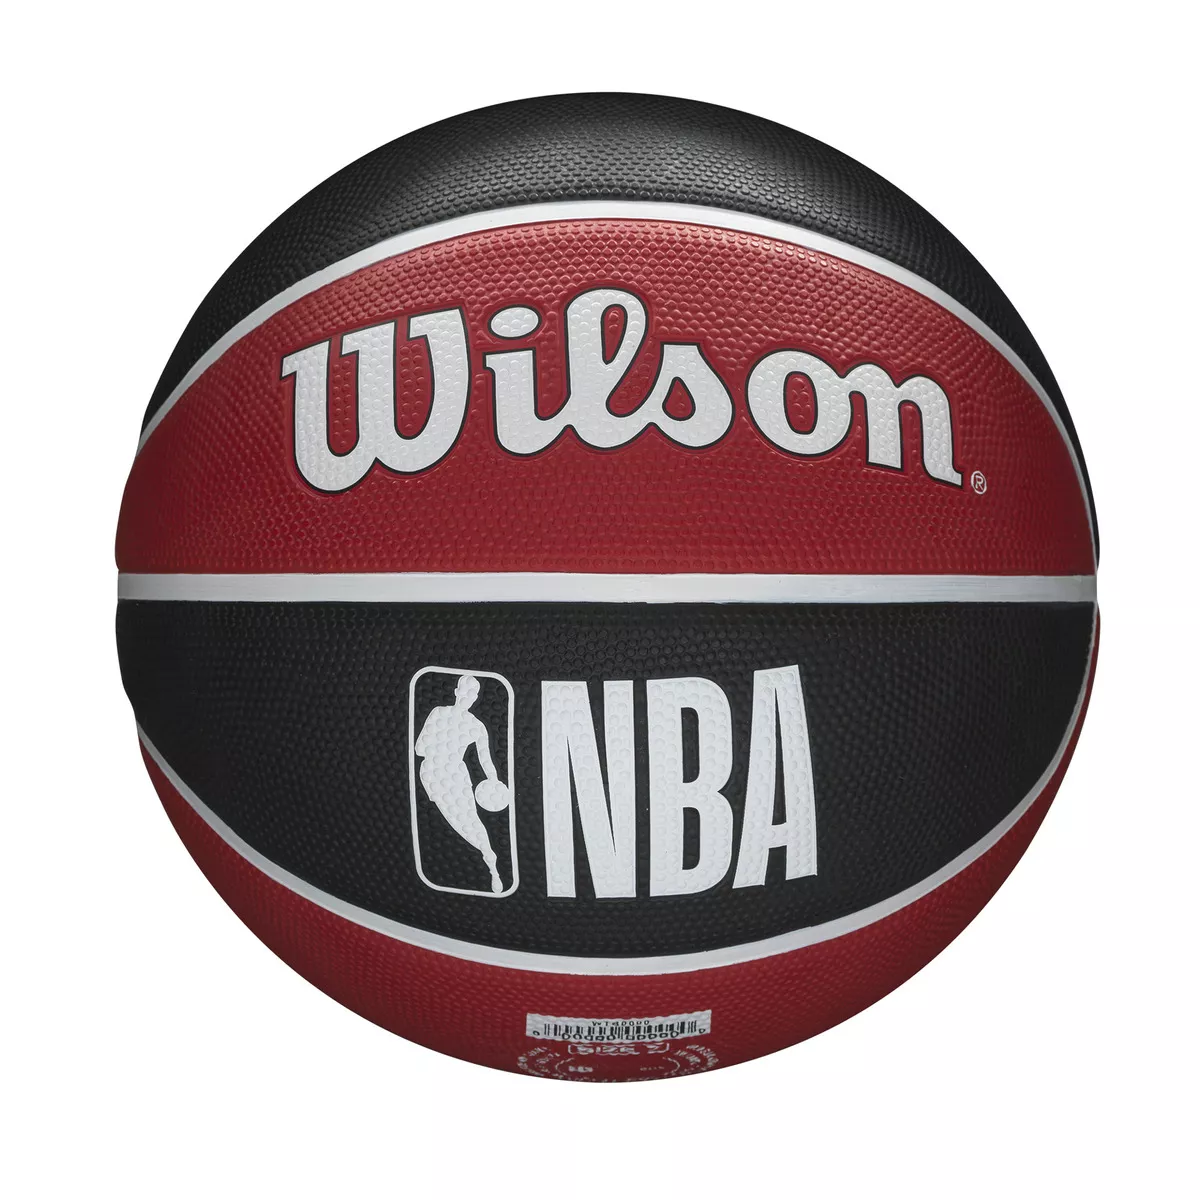 Tercera imagen para búsqueda de balon wilson baloncesto